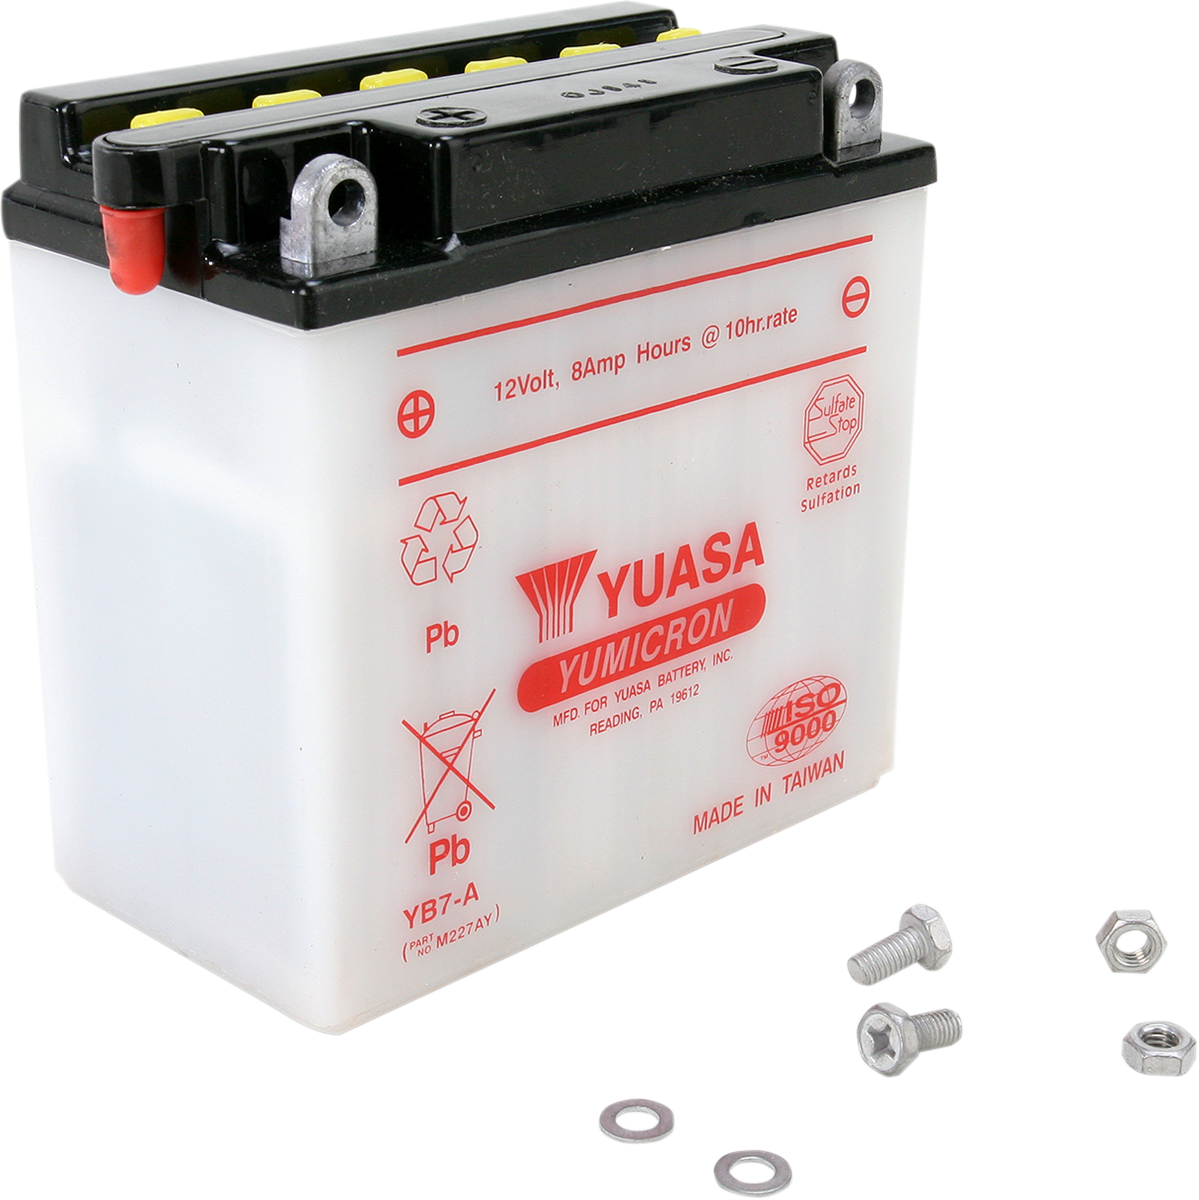 YUASA Battery - YB7-A YUAM227AY